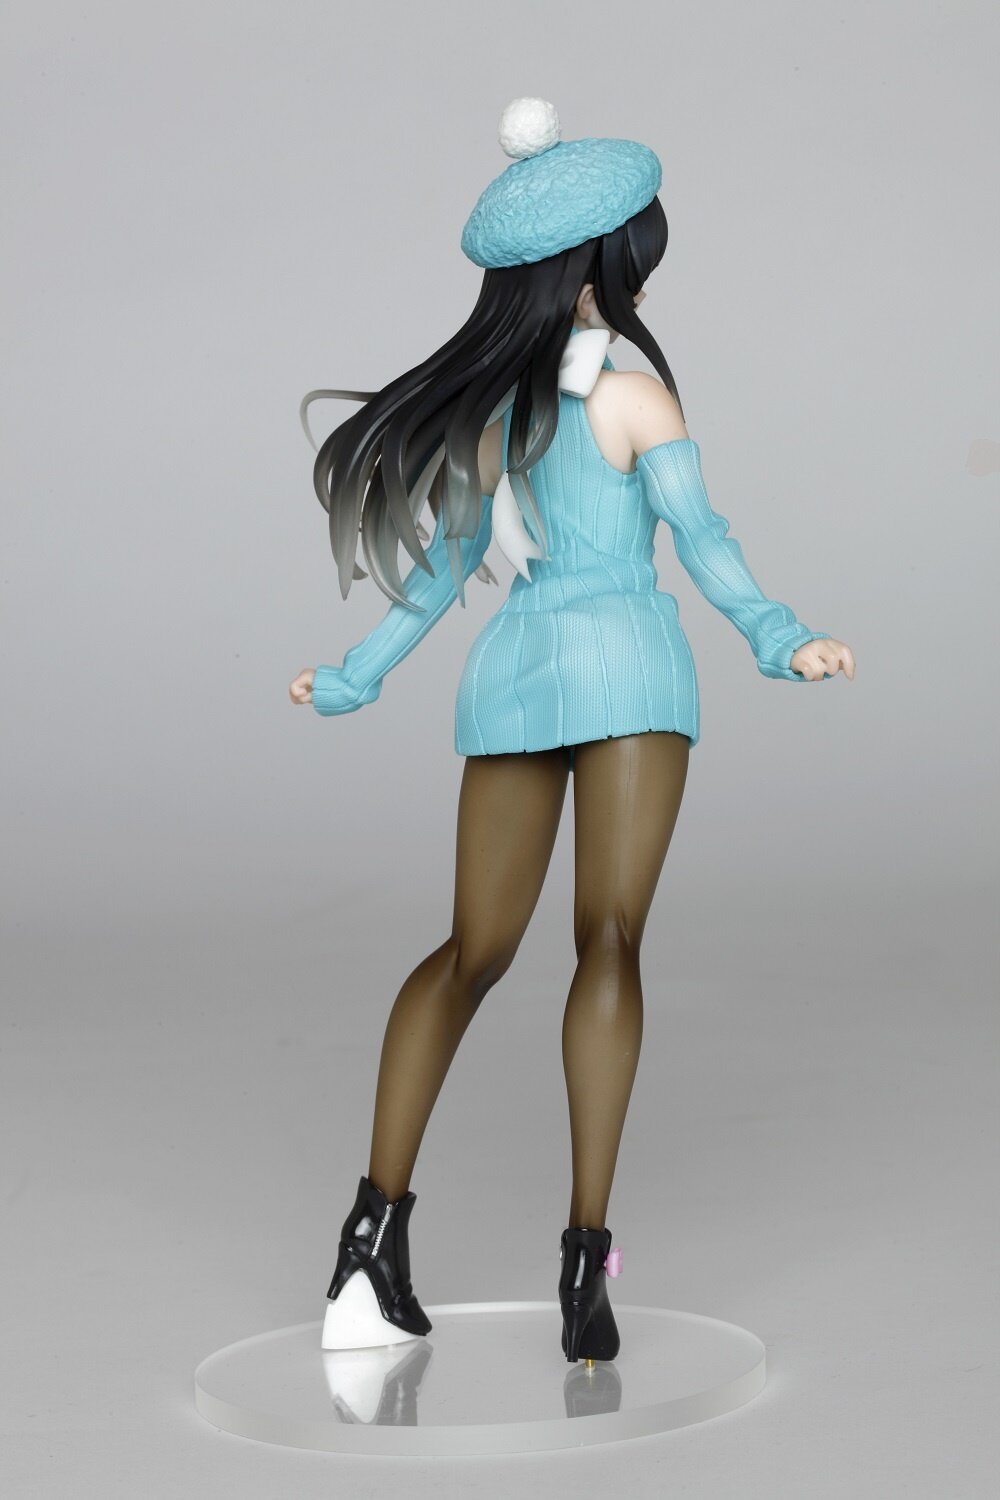 Coreful Figure Rascal Does Not Dream of Bunny Girl Senpai Mai Sakurajima:  Newly Written Knit Dress Ver.